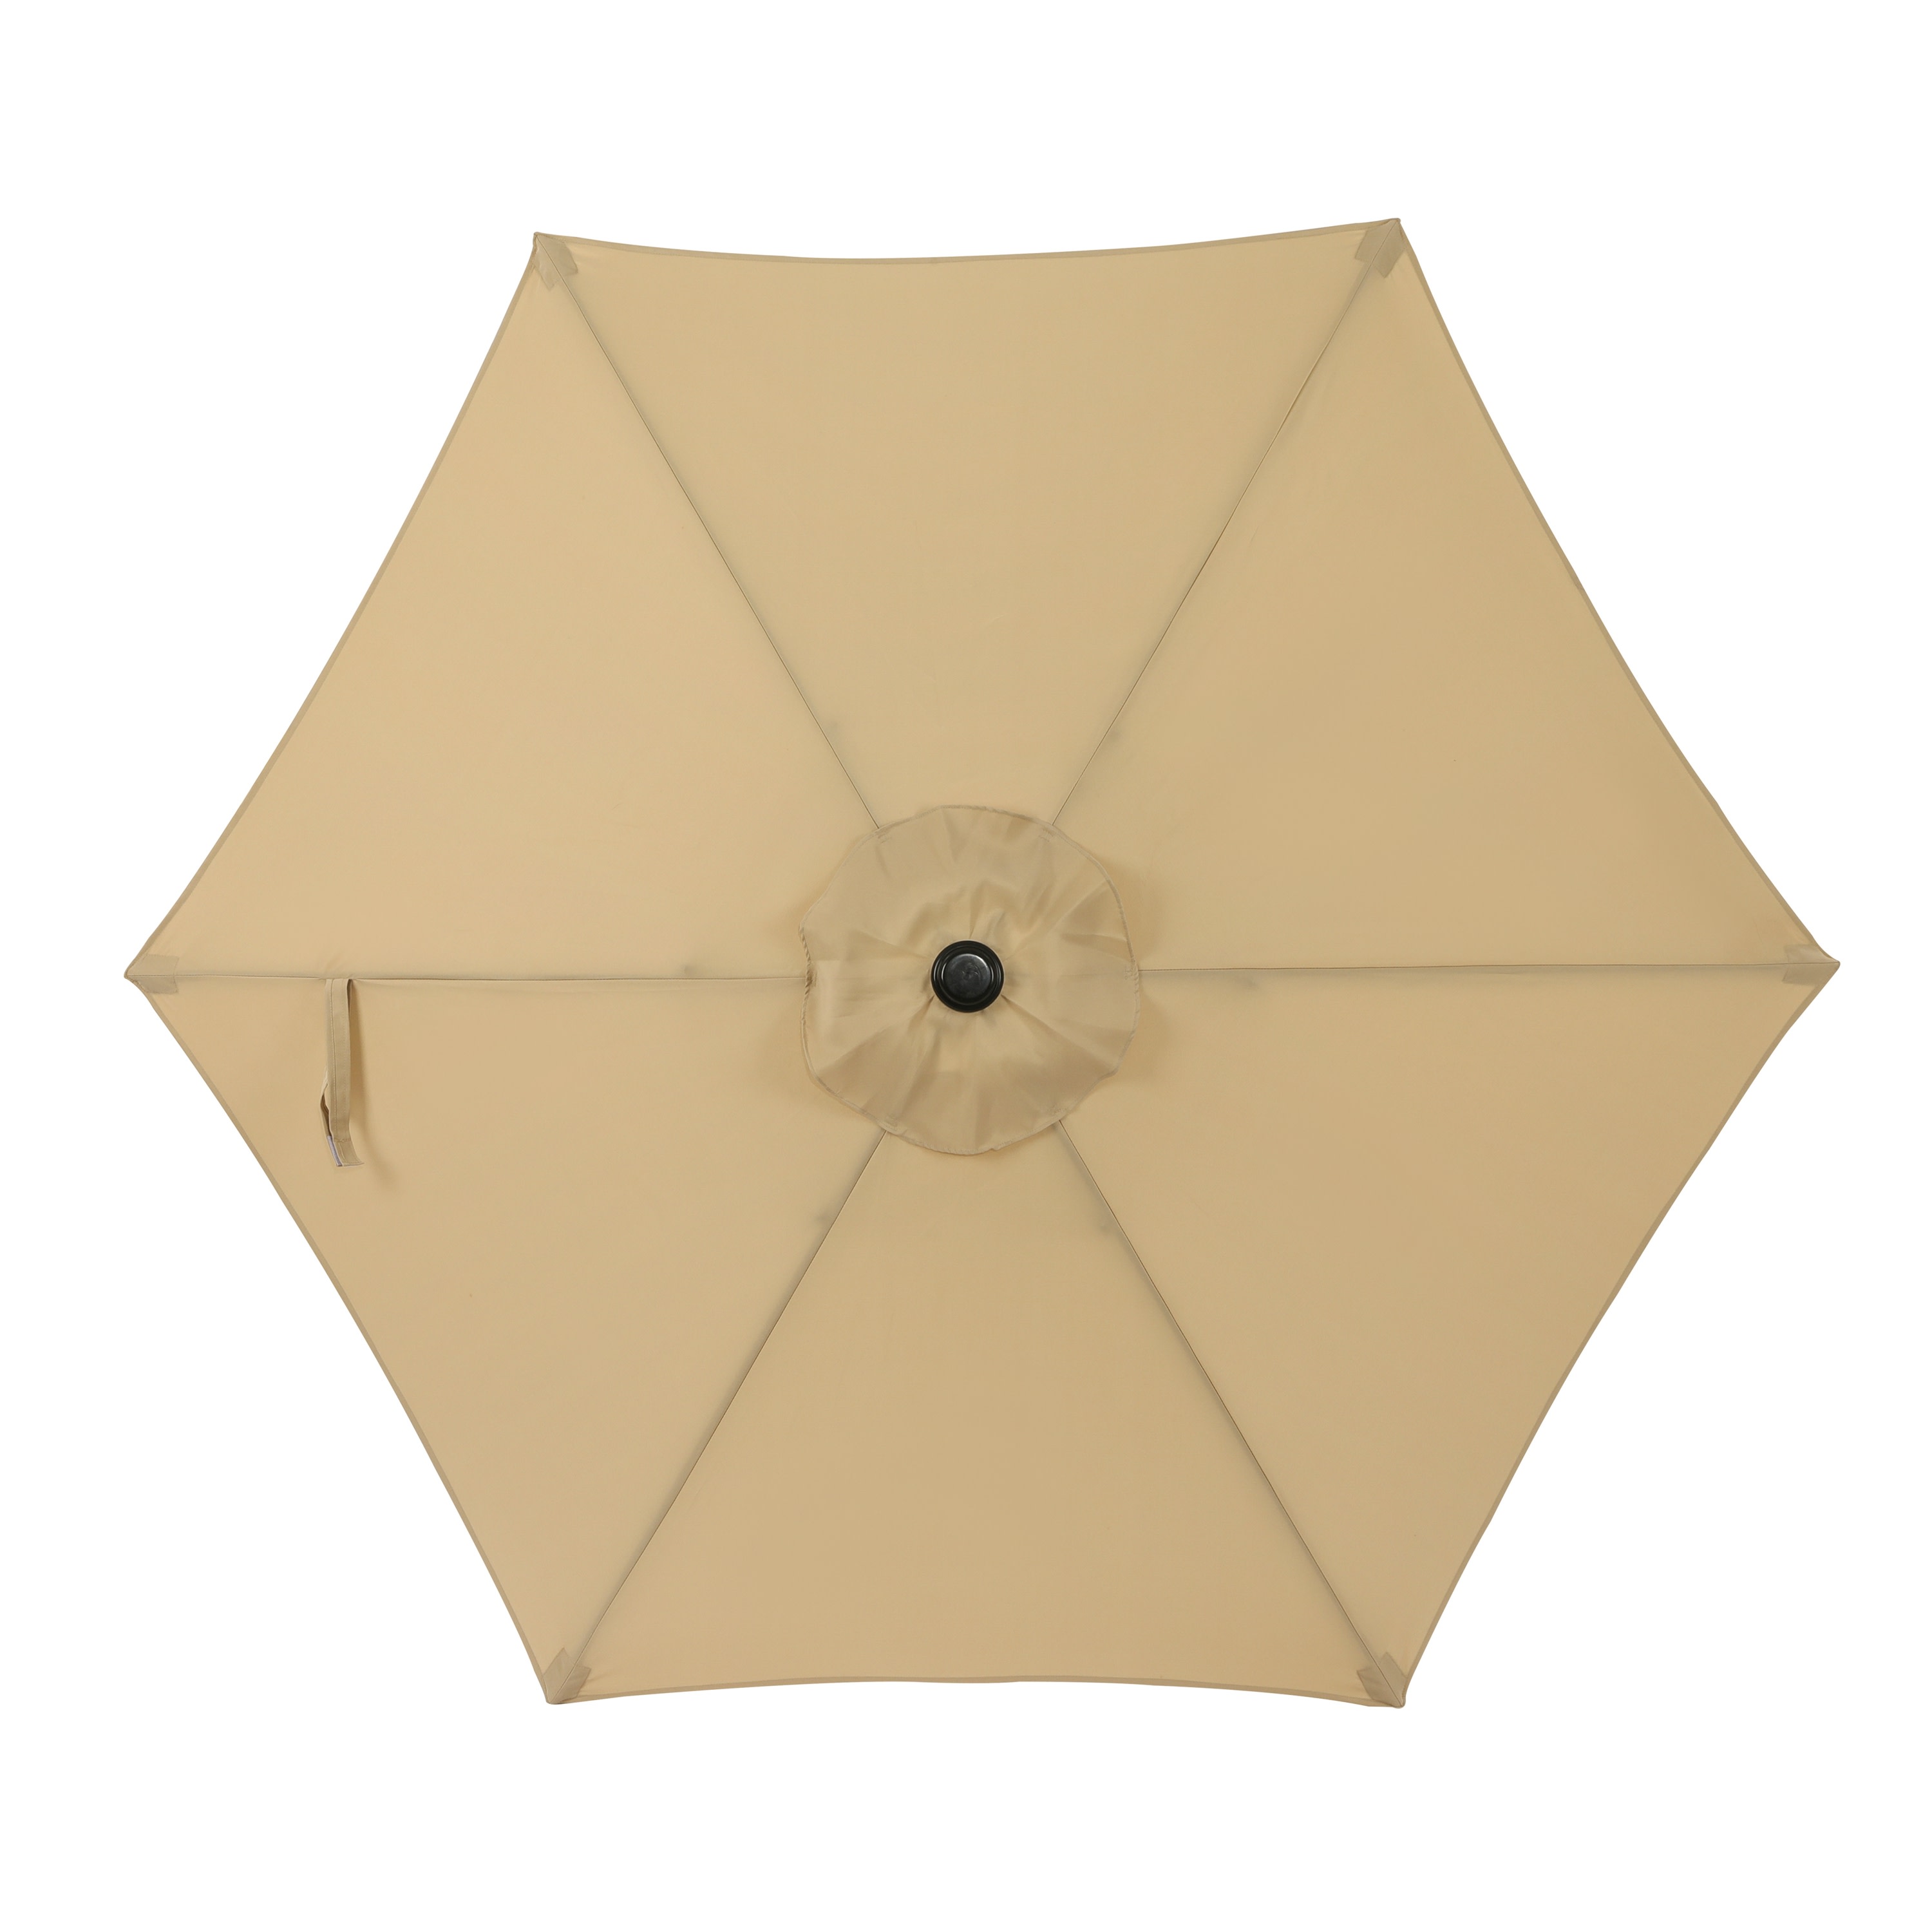 Island Umbrella Bistro 7.5' Beige Solid Print Hexagon Market Patio Umbrella - image 3 of 9